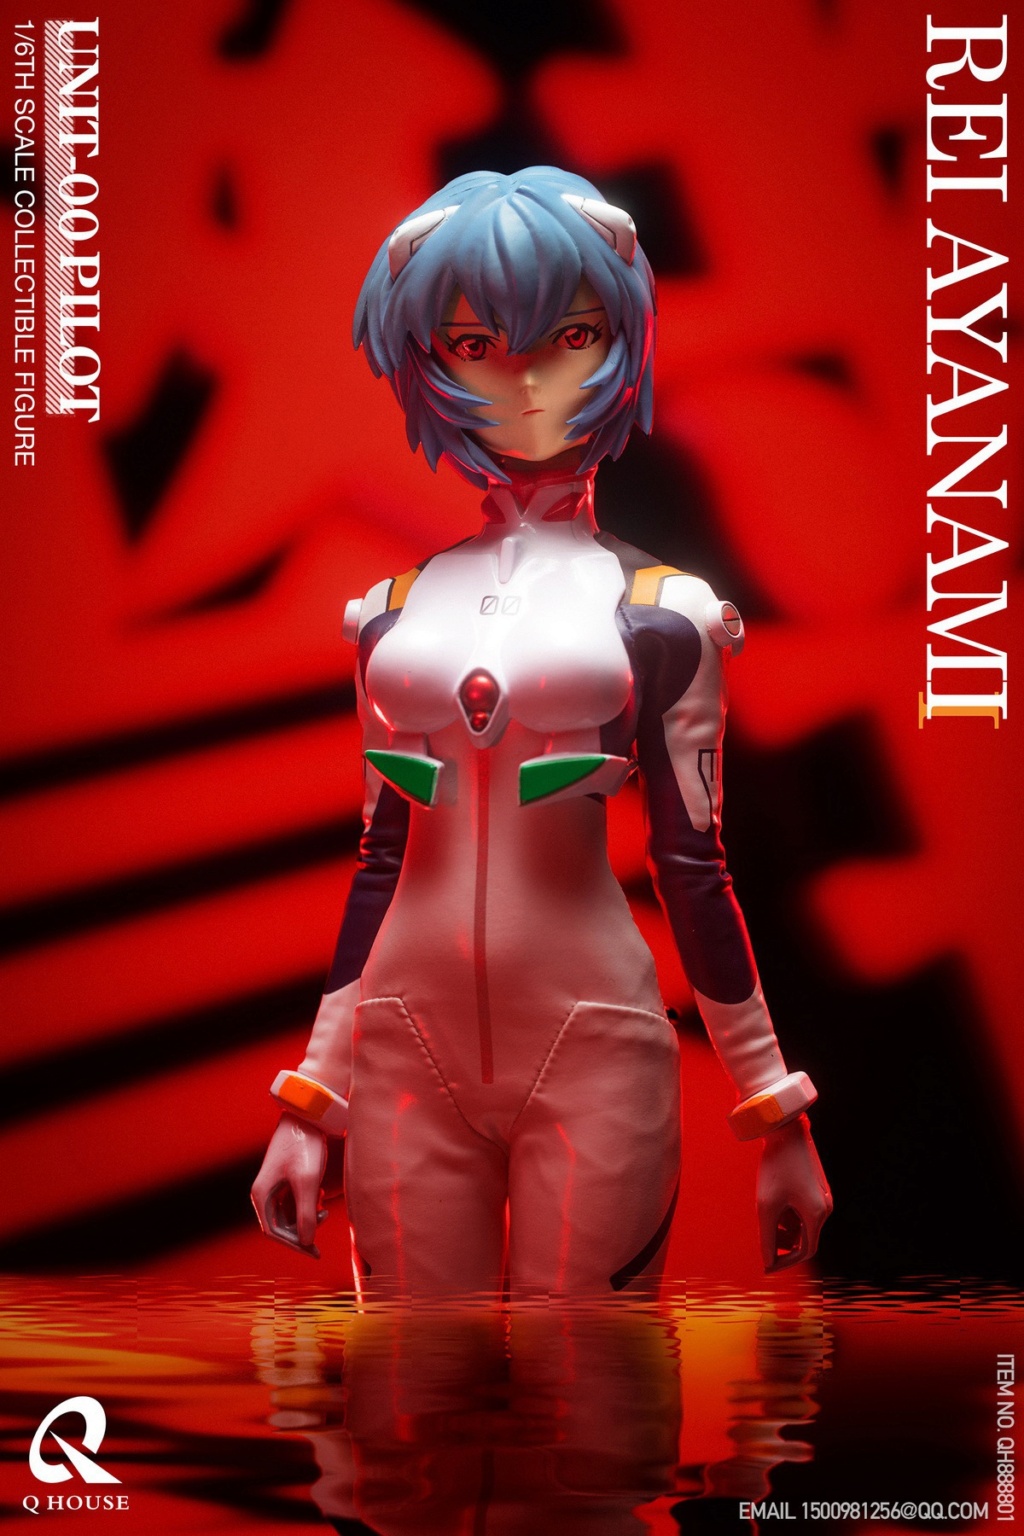 ReiAyanami - NEW PRODUCT: Q House: 1/6 Evangelion - Rei Ayanami  11143011